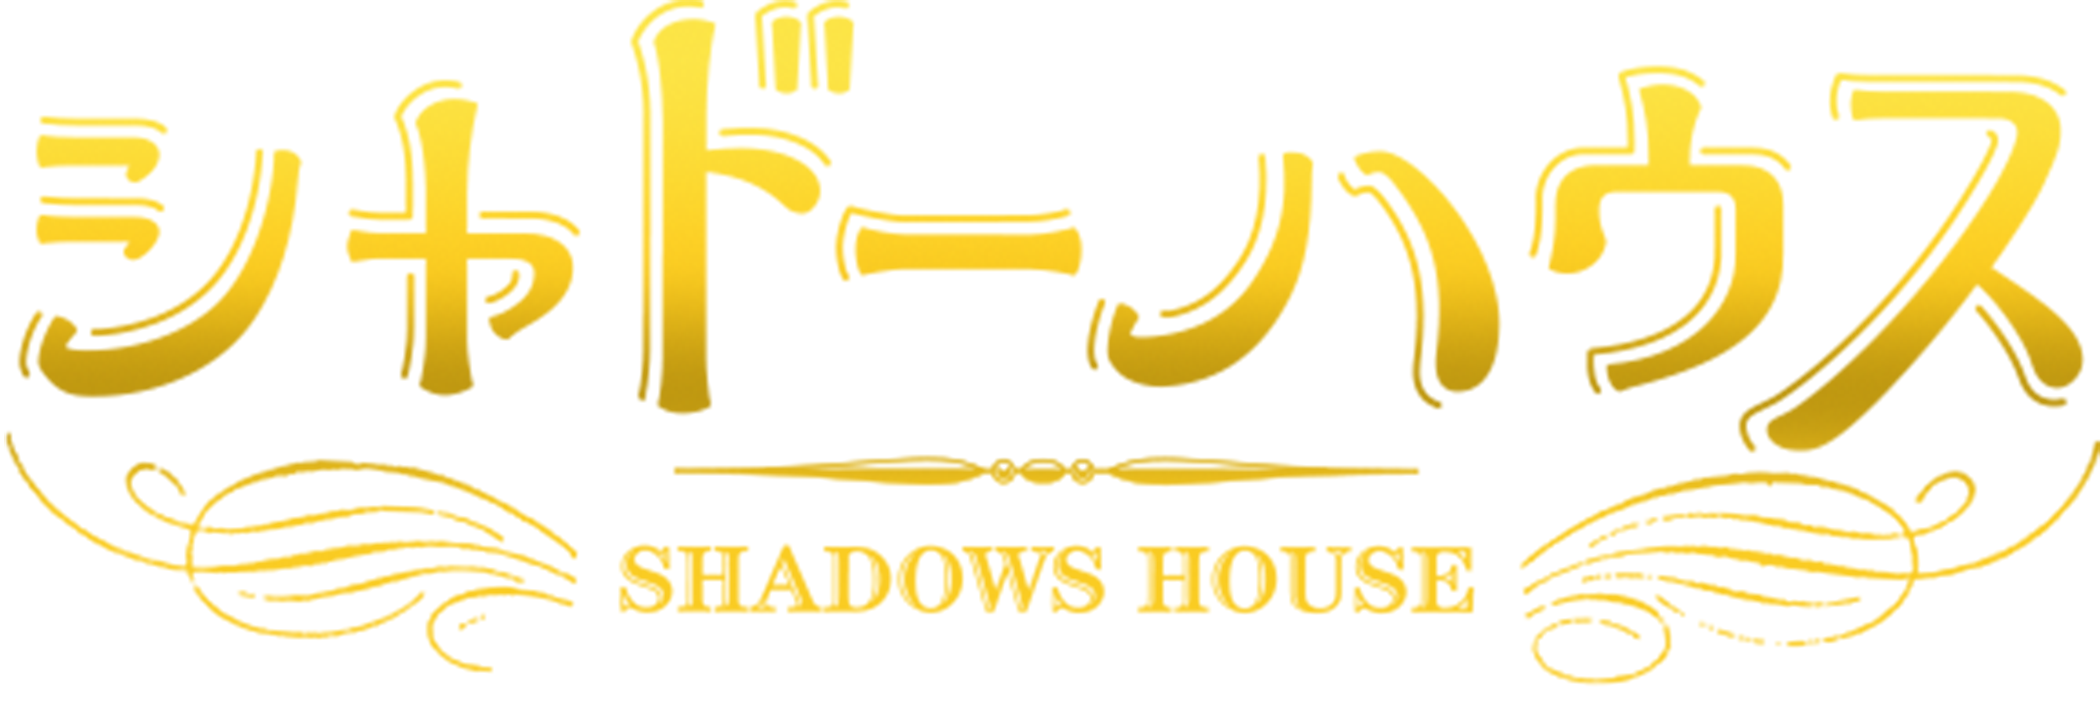 Shadows House (Place), Shadows House Wiki